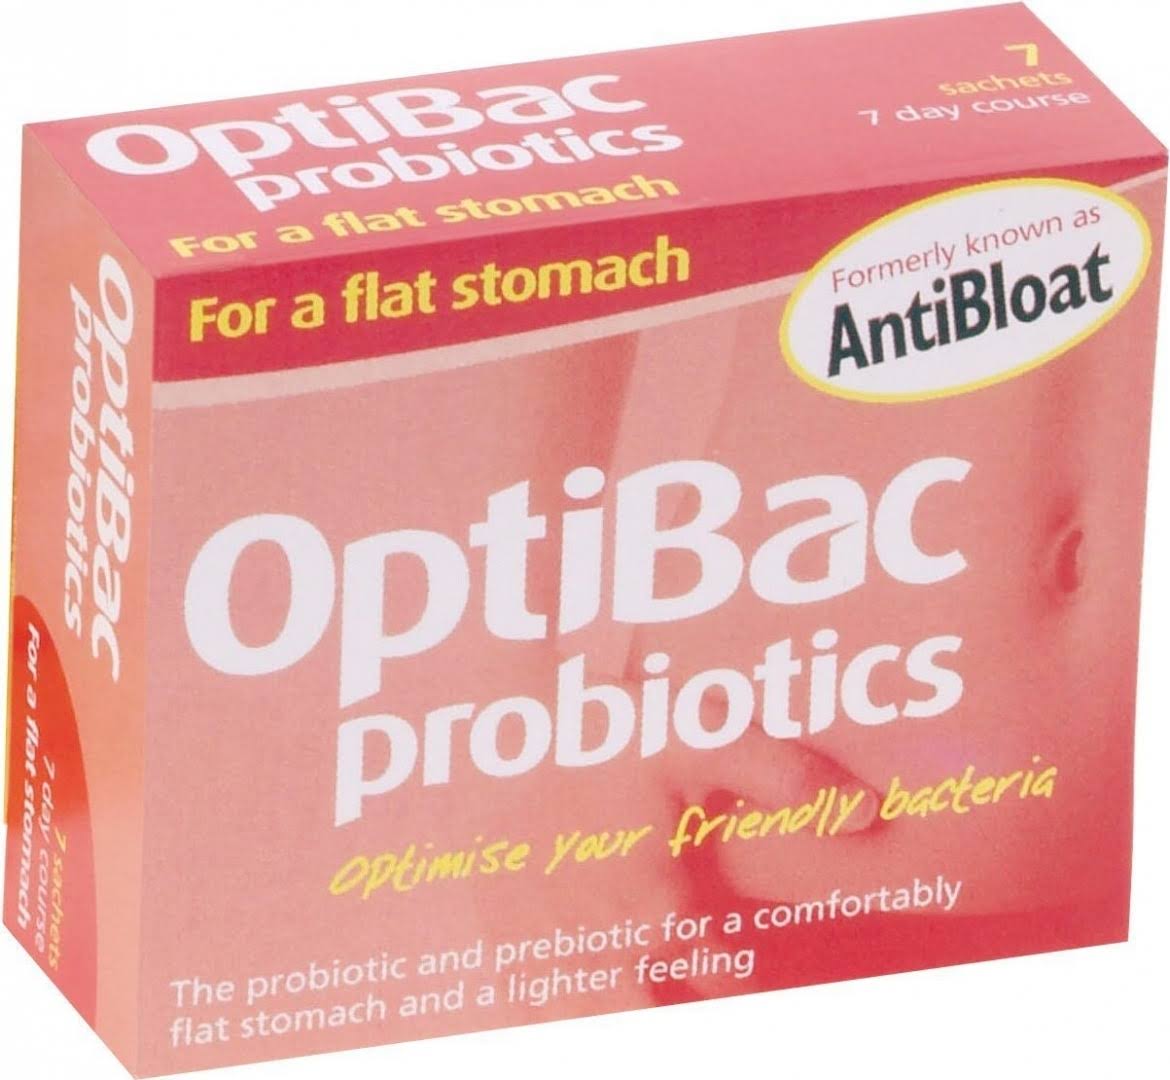 OptiBac Probiotics AntiBloat For a Flat Stomach - 7 Sachets